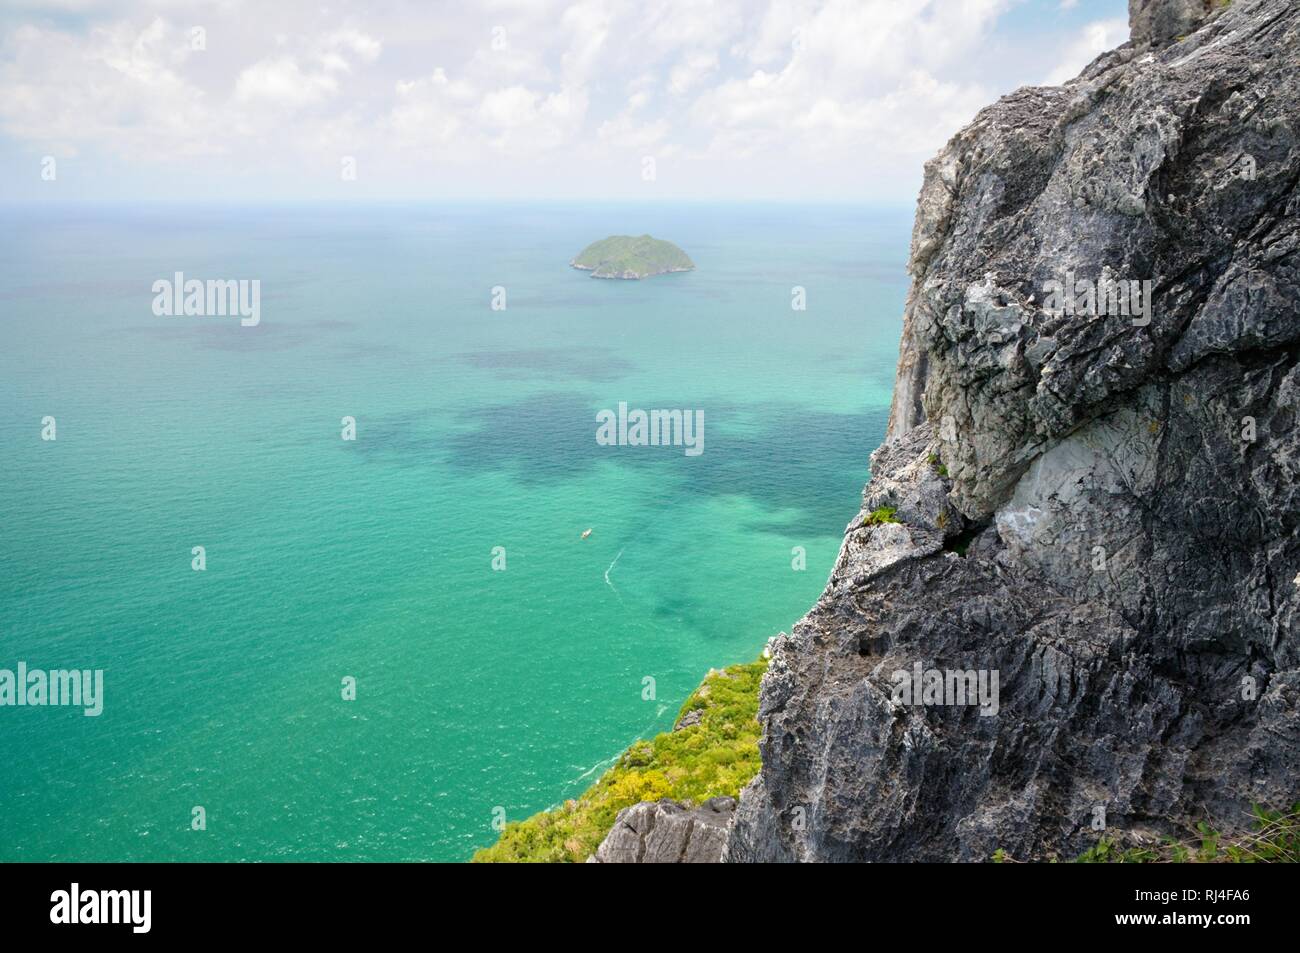 Aerial view of tiny uninhabited island in the Gulf of Thailand near coastline of Prachuap Khiri Khan province of Thailand Stock Photo